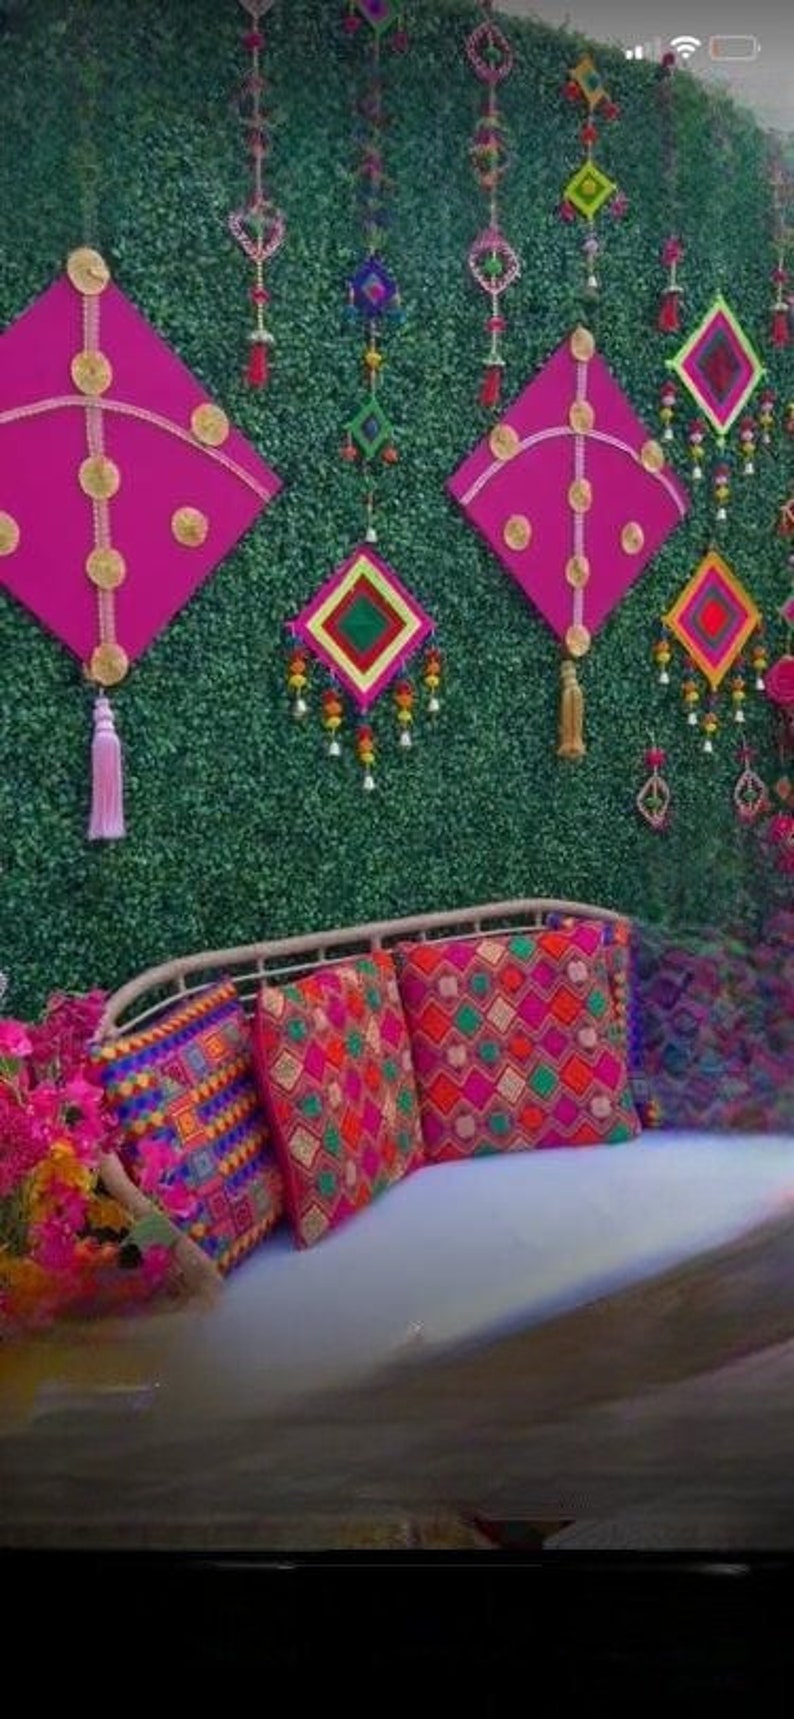 Kite Hangings With Tassel For Wedding Decoration Mehndi Sangeet Home Shaadi Haldi Decor Rajasthani Kites decor Handicrafts image 1